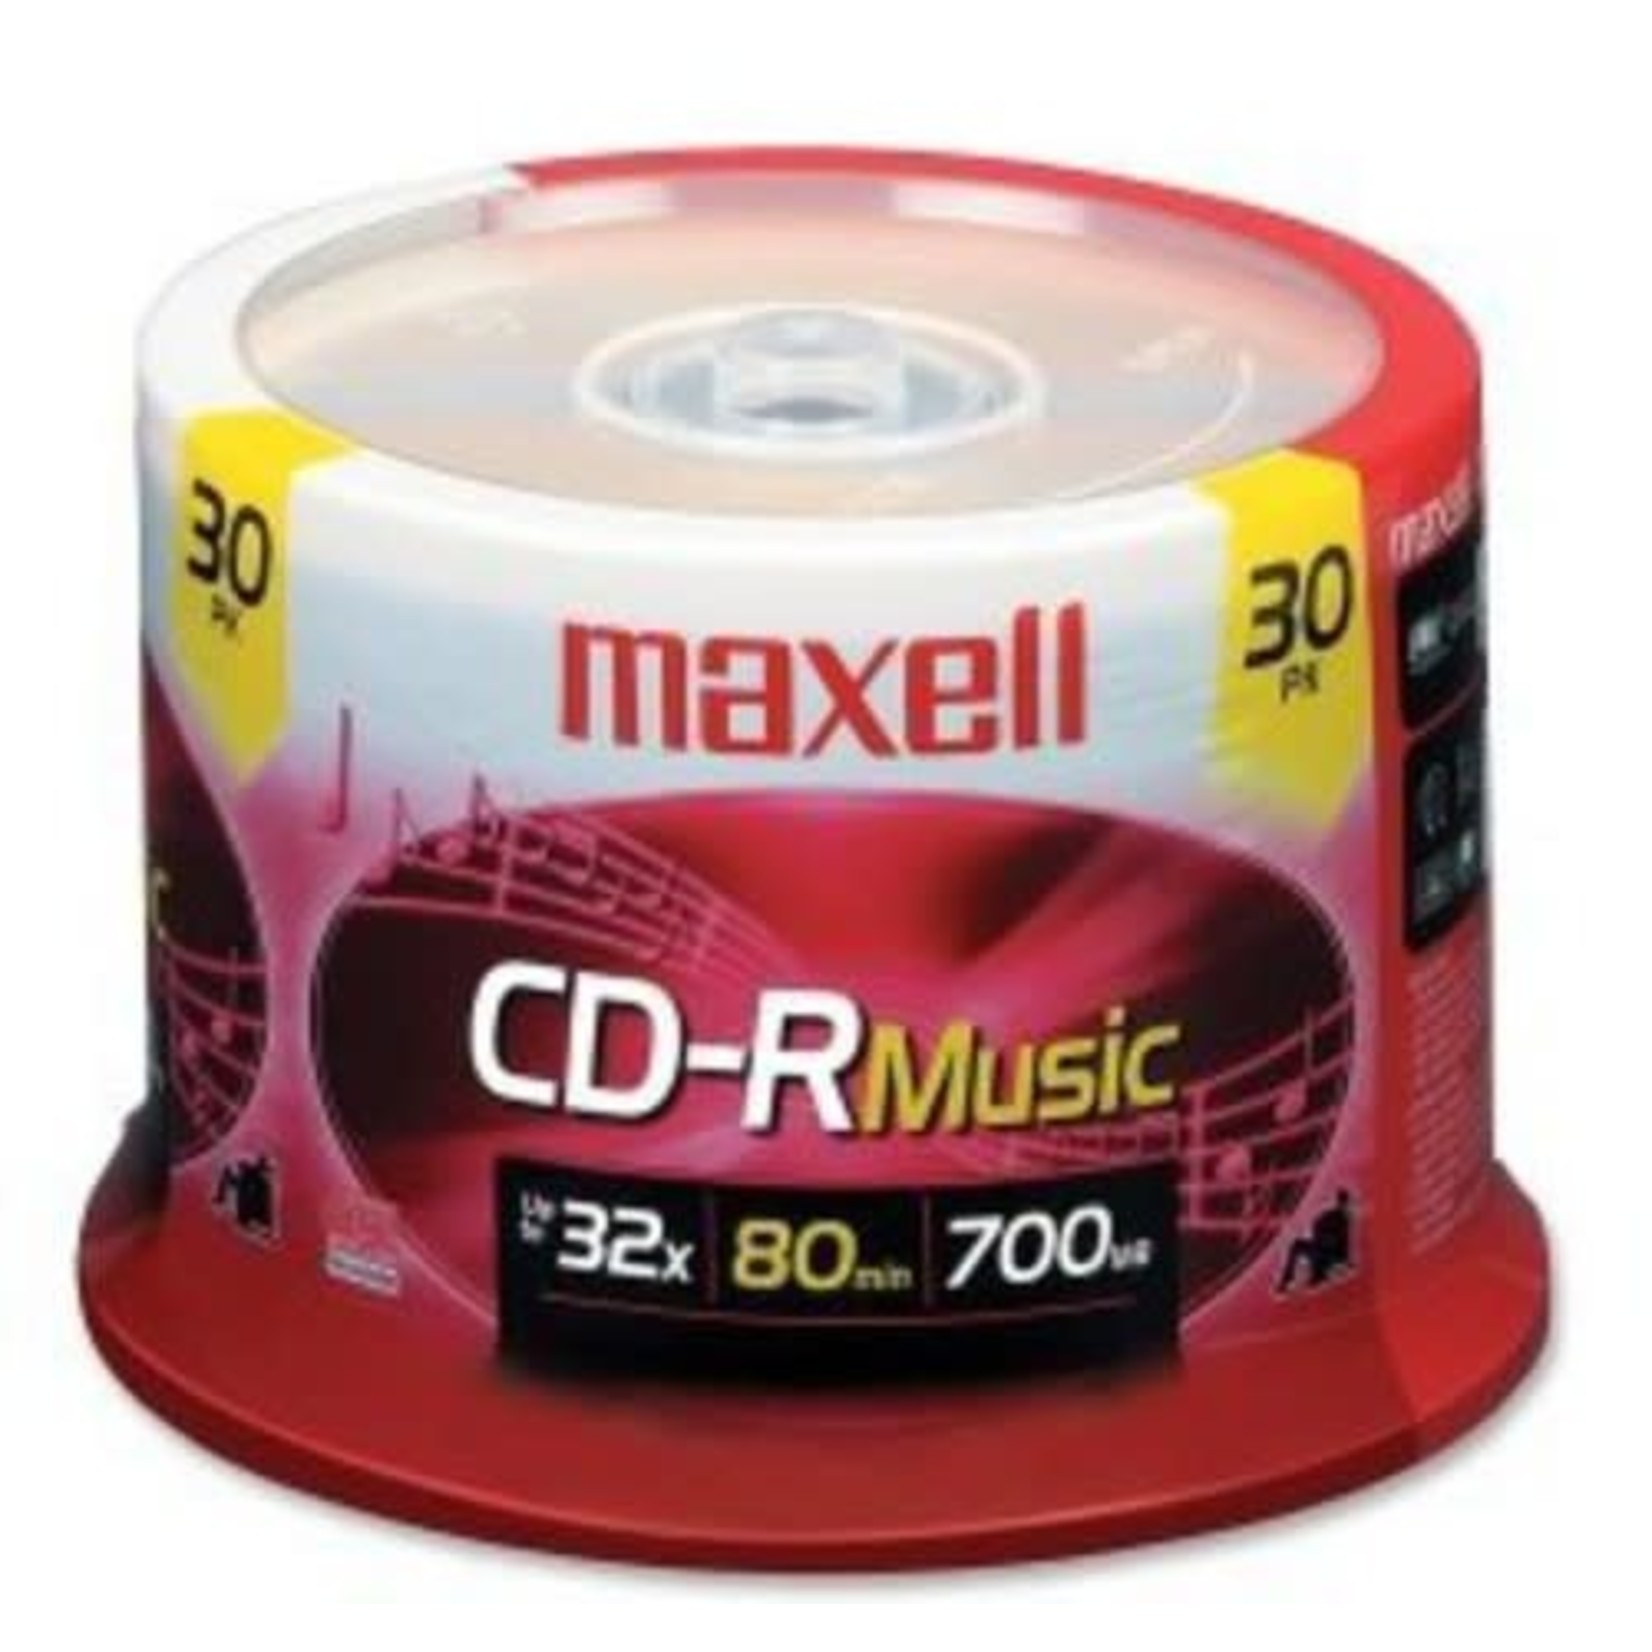 CD-R Music 80 Minute - 30 Pack